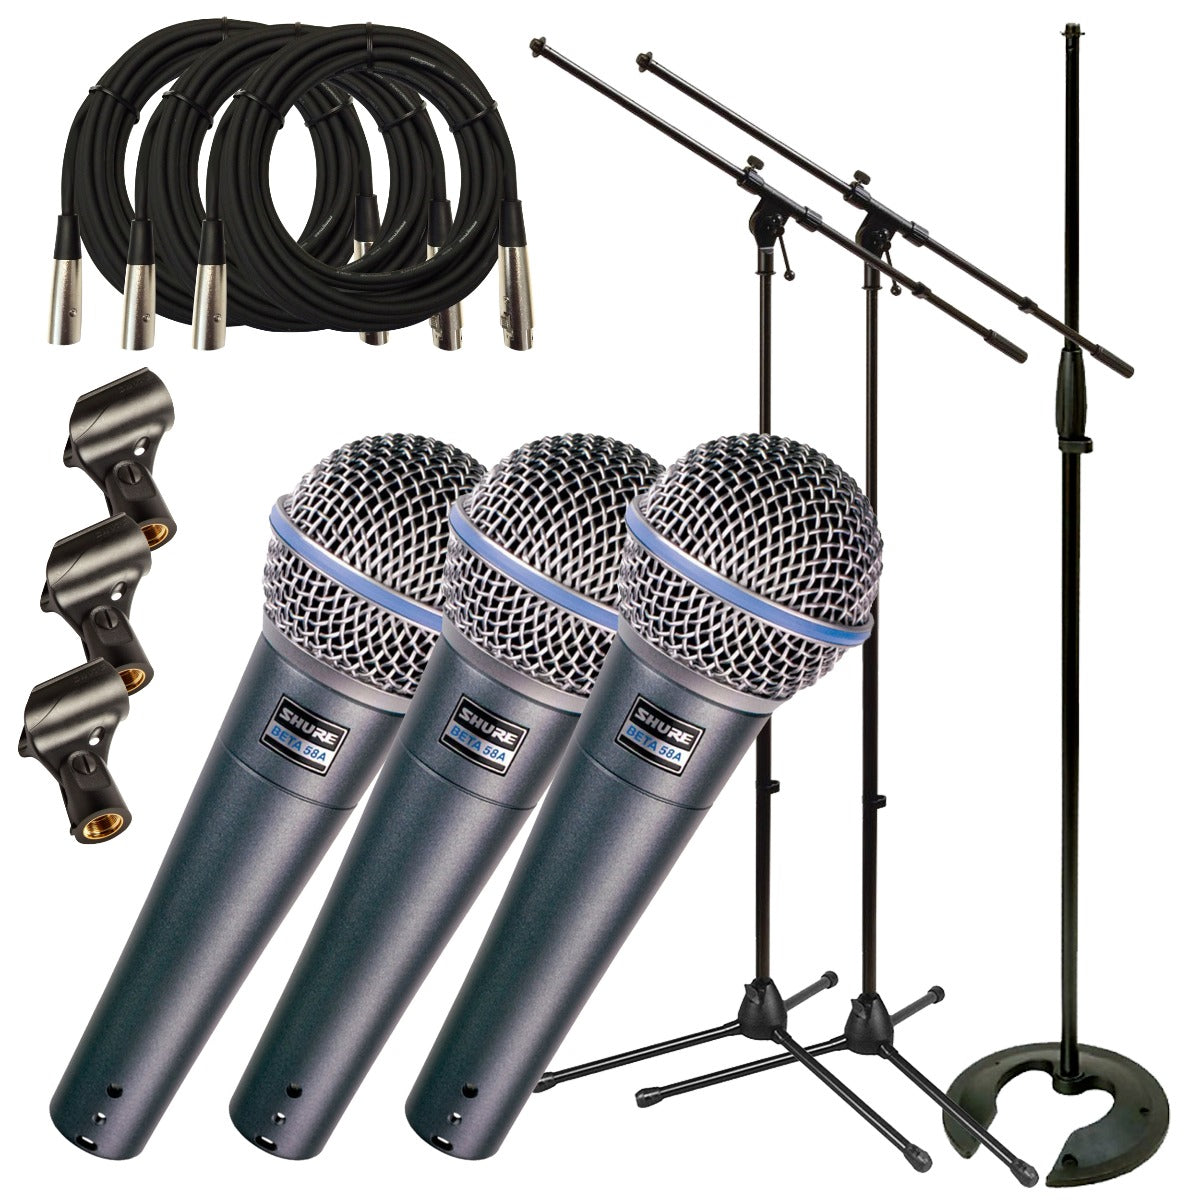 Shure Beta 58A Dynamic Vocal Microphone TRIPLE STAGE PAK